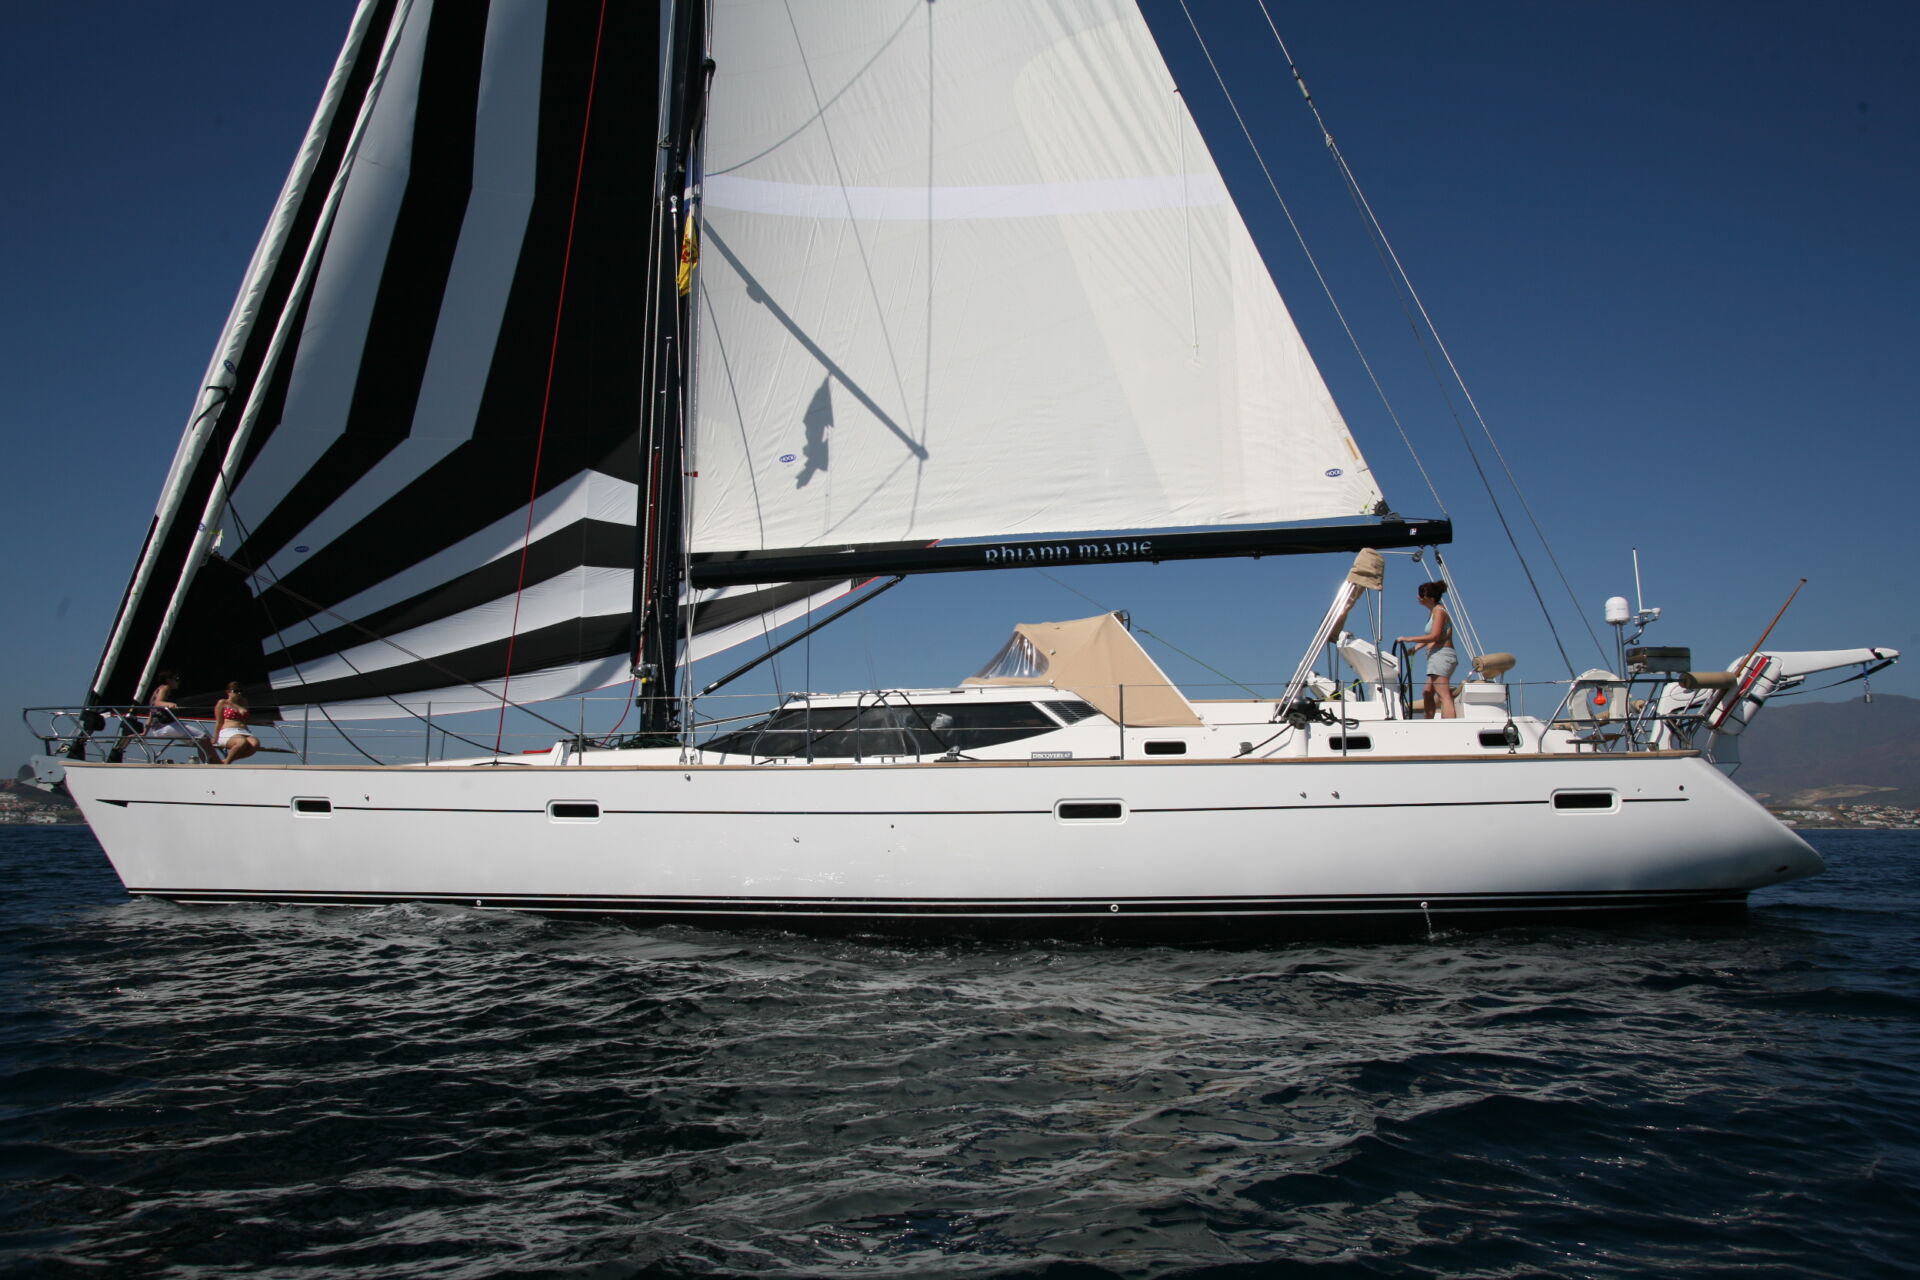 New CA: Sailing Yacht RHIANN MARIE Now Available for Sale